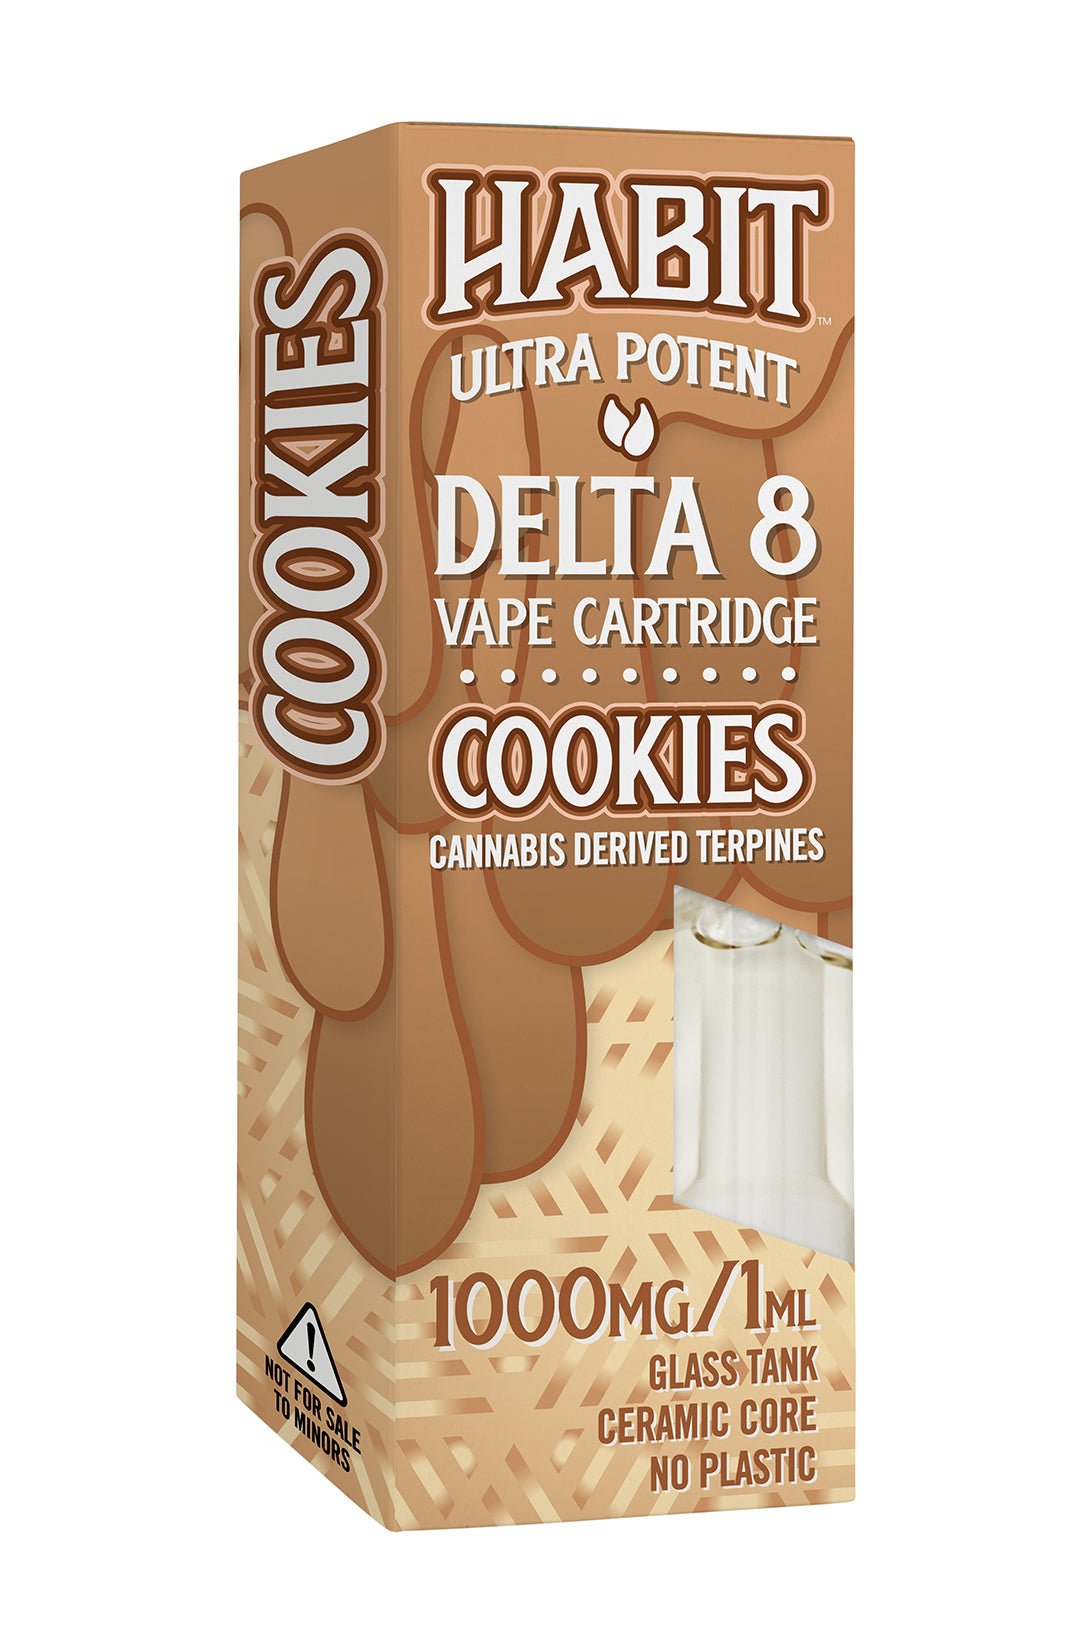 Delta 8 Live Resin Vape Cartridge – Cookies - Tree Spirit Wellness